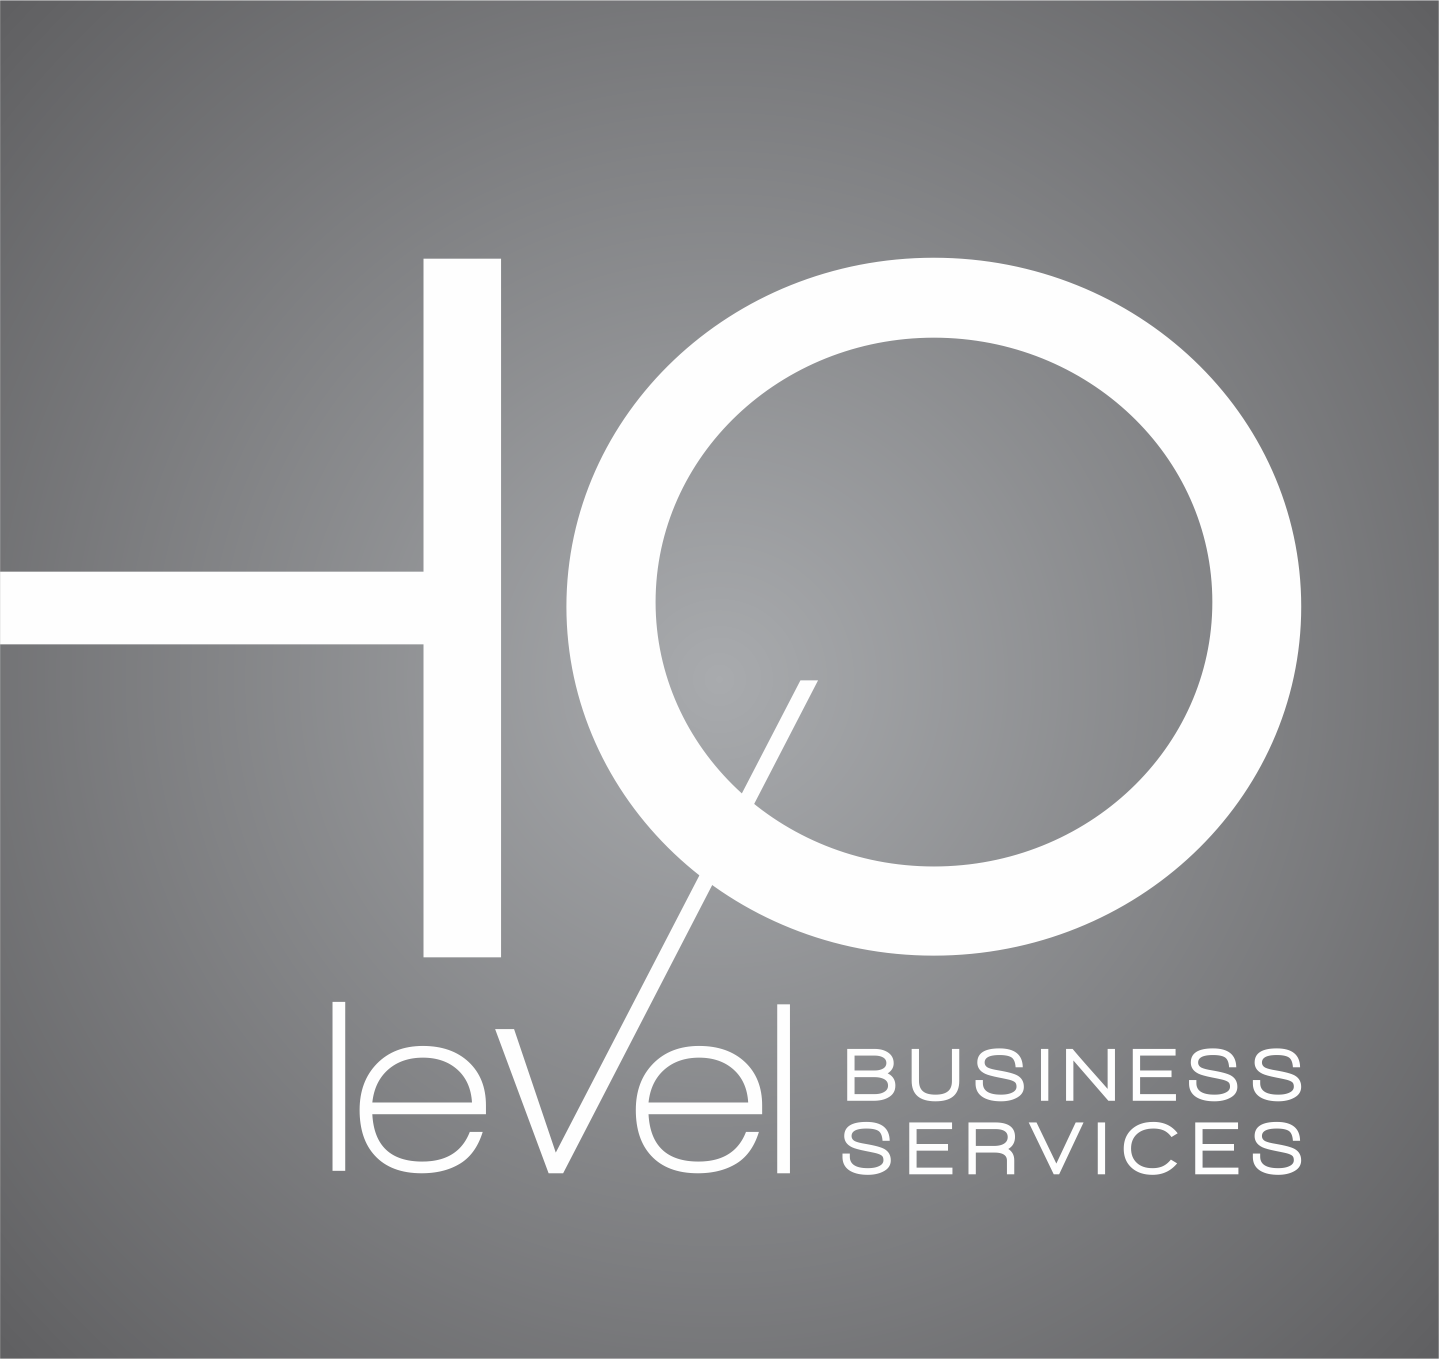 HQ LEVEL BUSINESS SERVICES